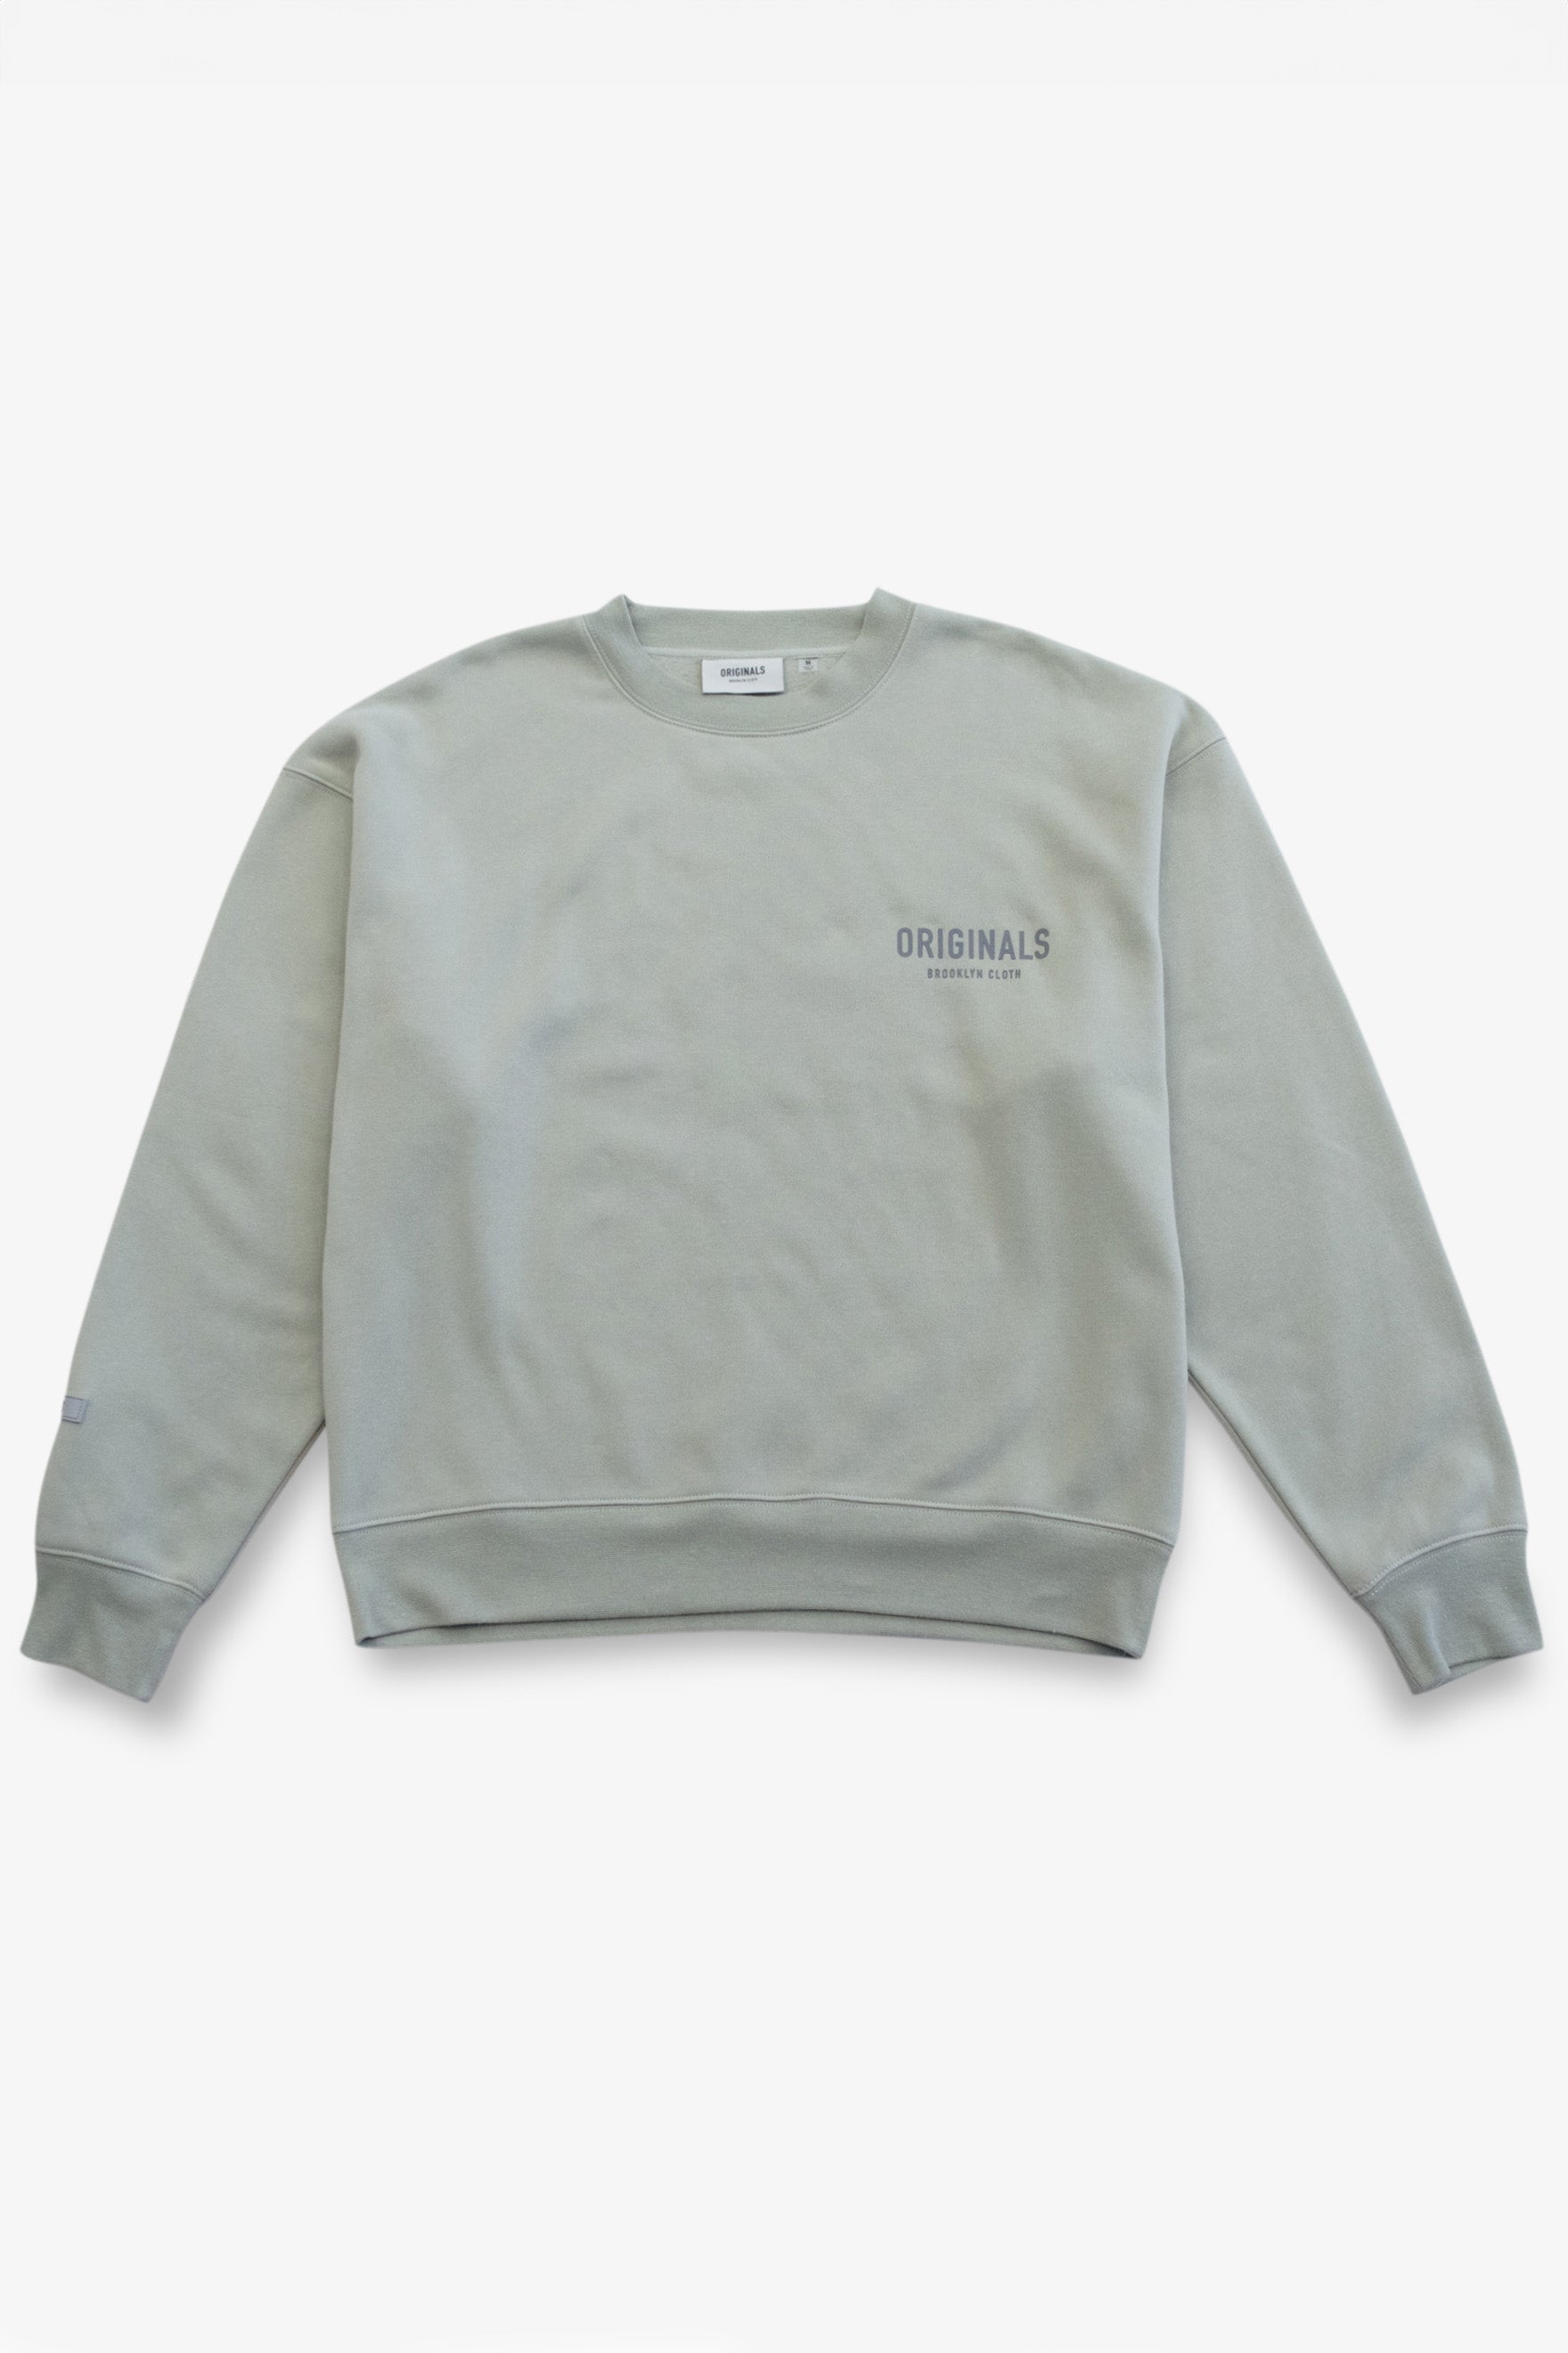 Originals Crewneck Sweatshirt